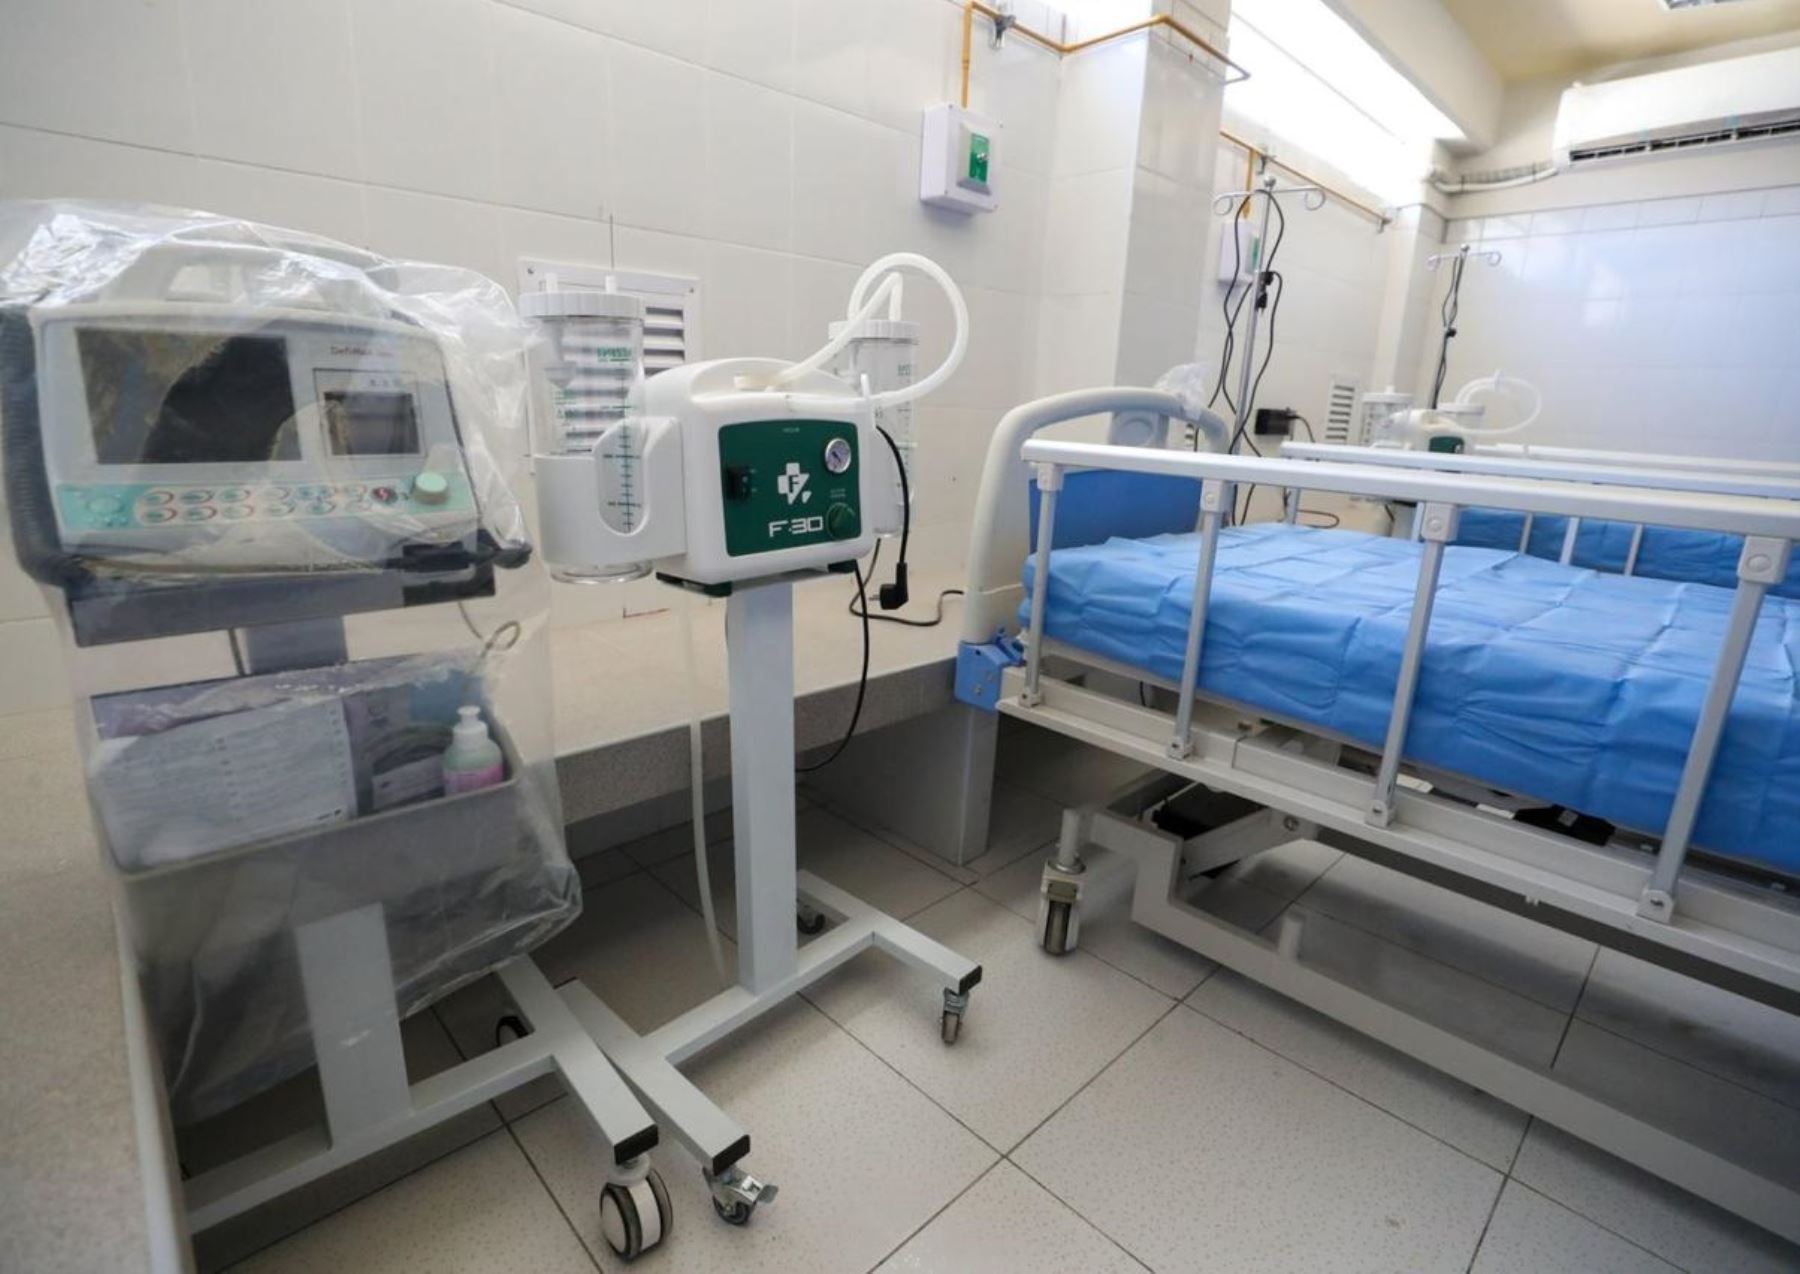 Petroperú donará hospital modular a Talara que estará listo a fines de julio y atenderá a pacientes afectados con coronavirus (covid-19).